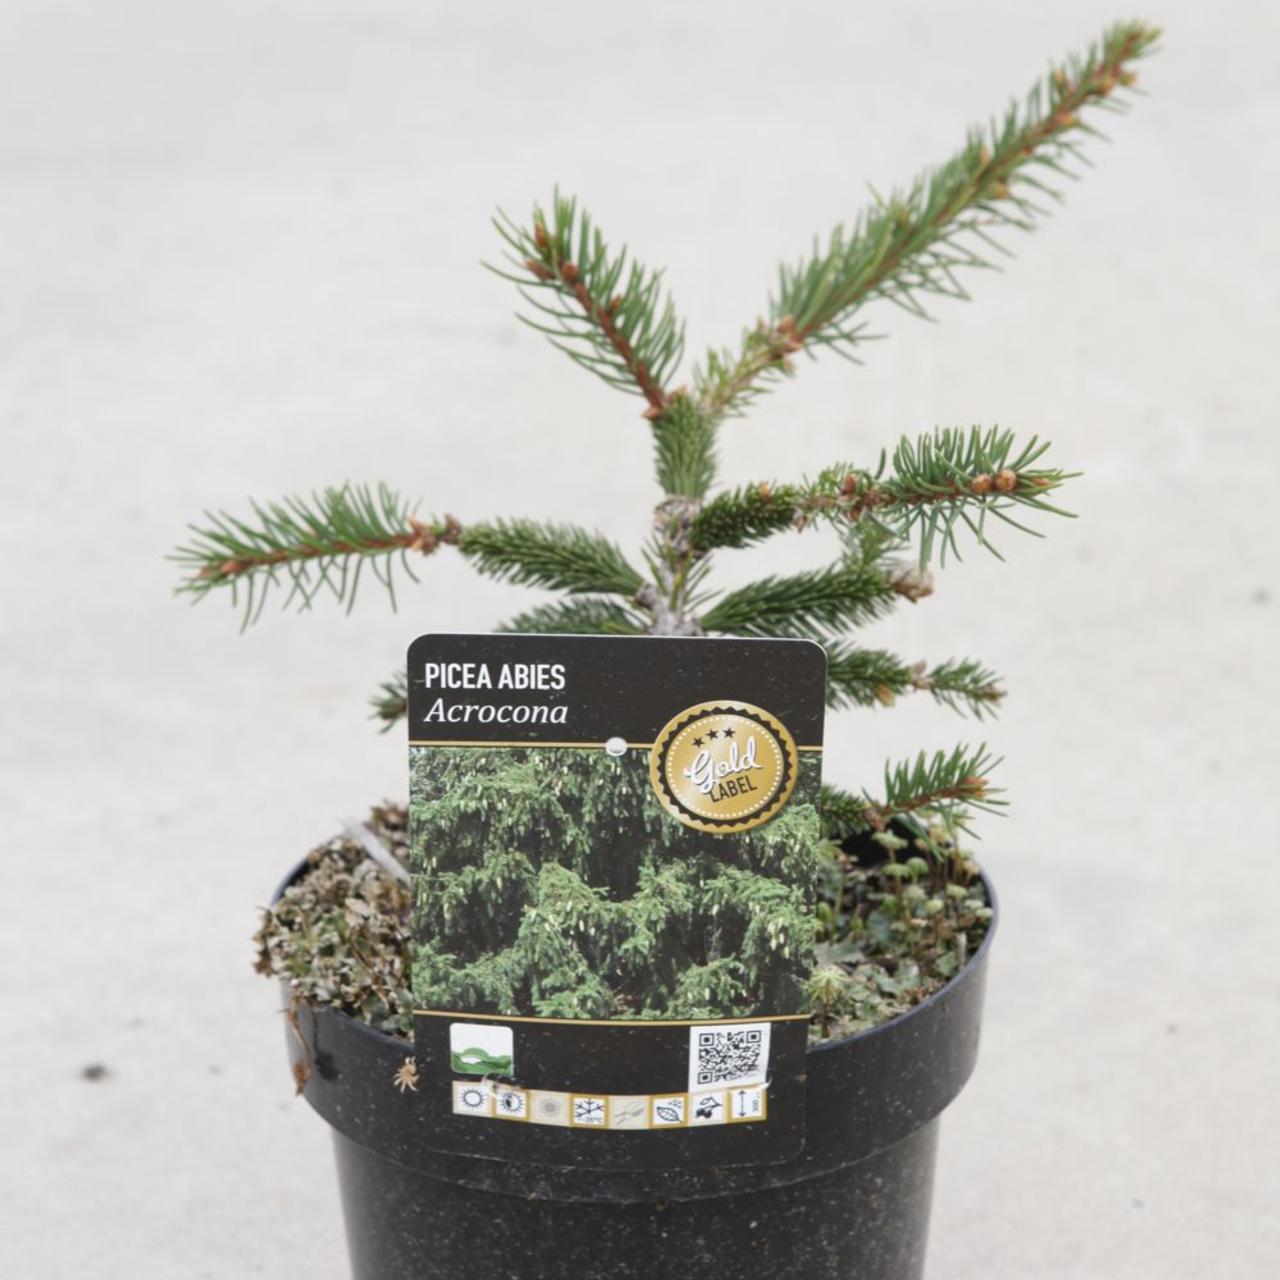 Picea abies 'Acrocona' plant